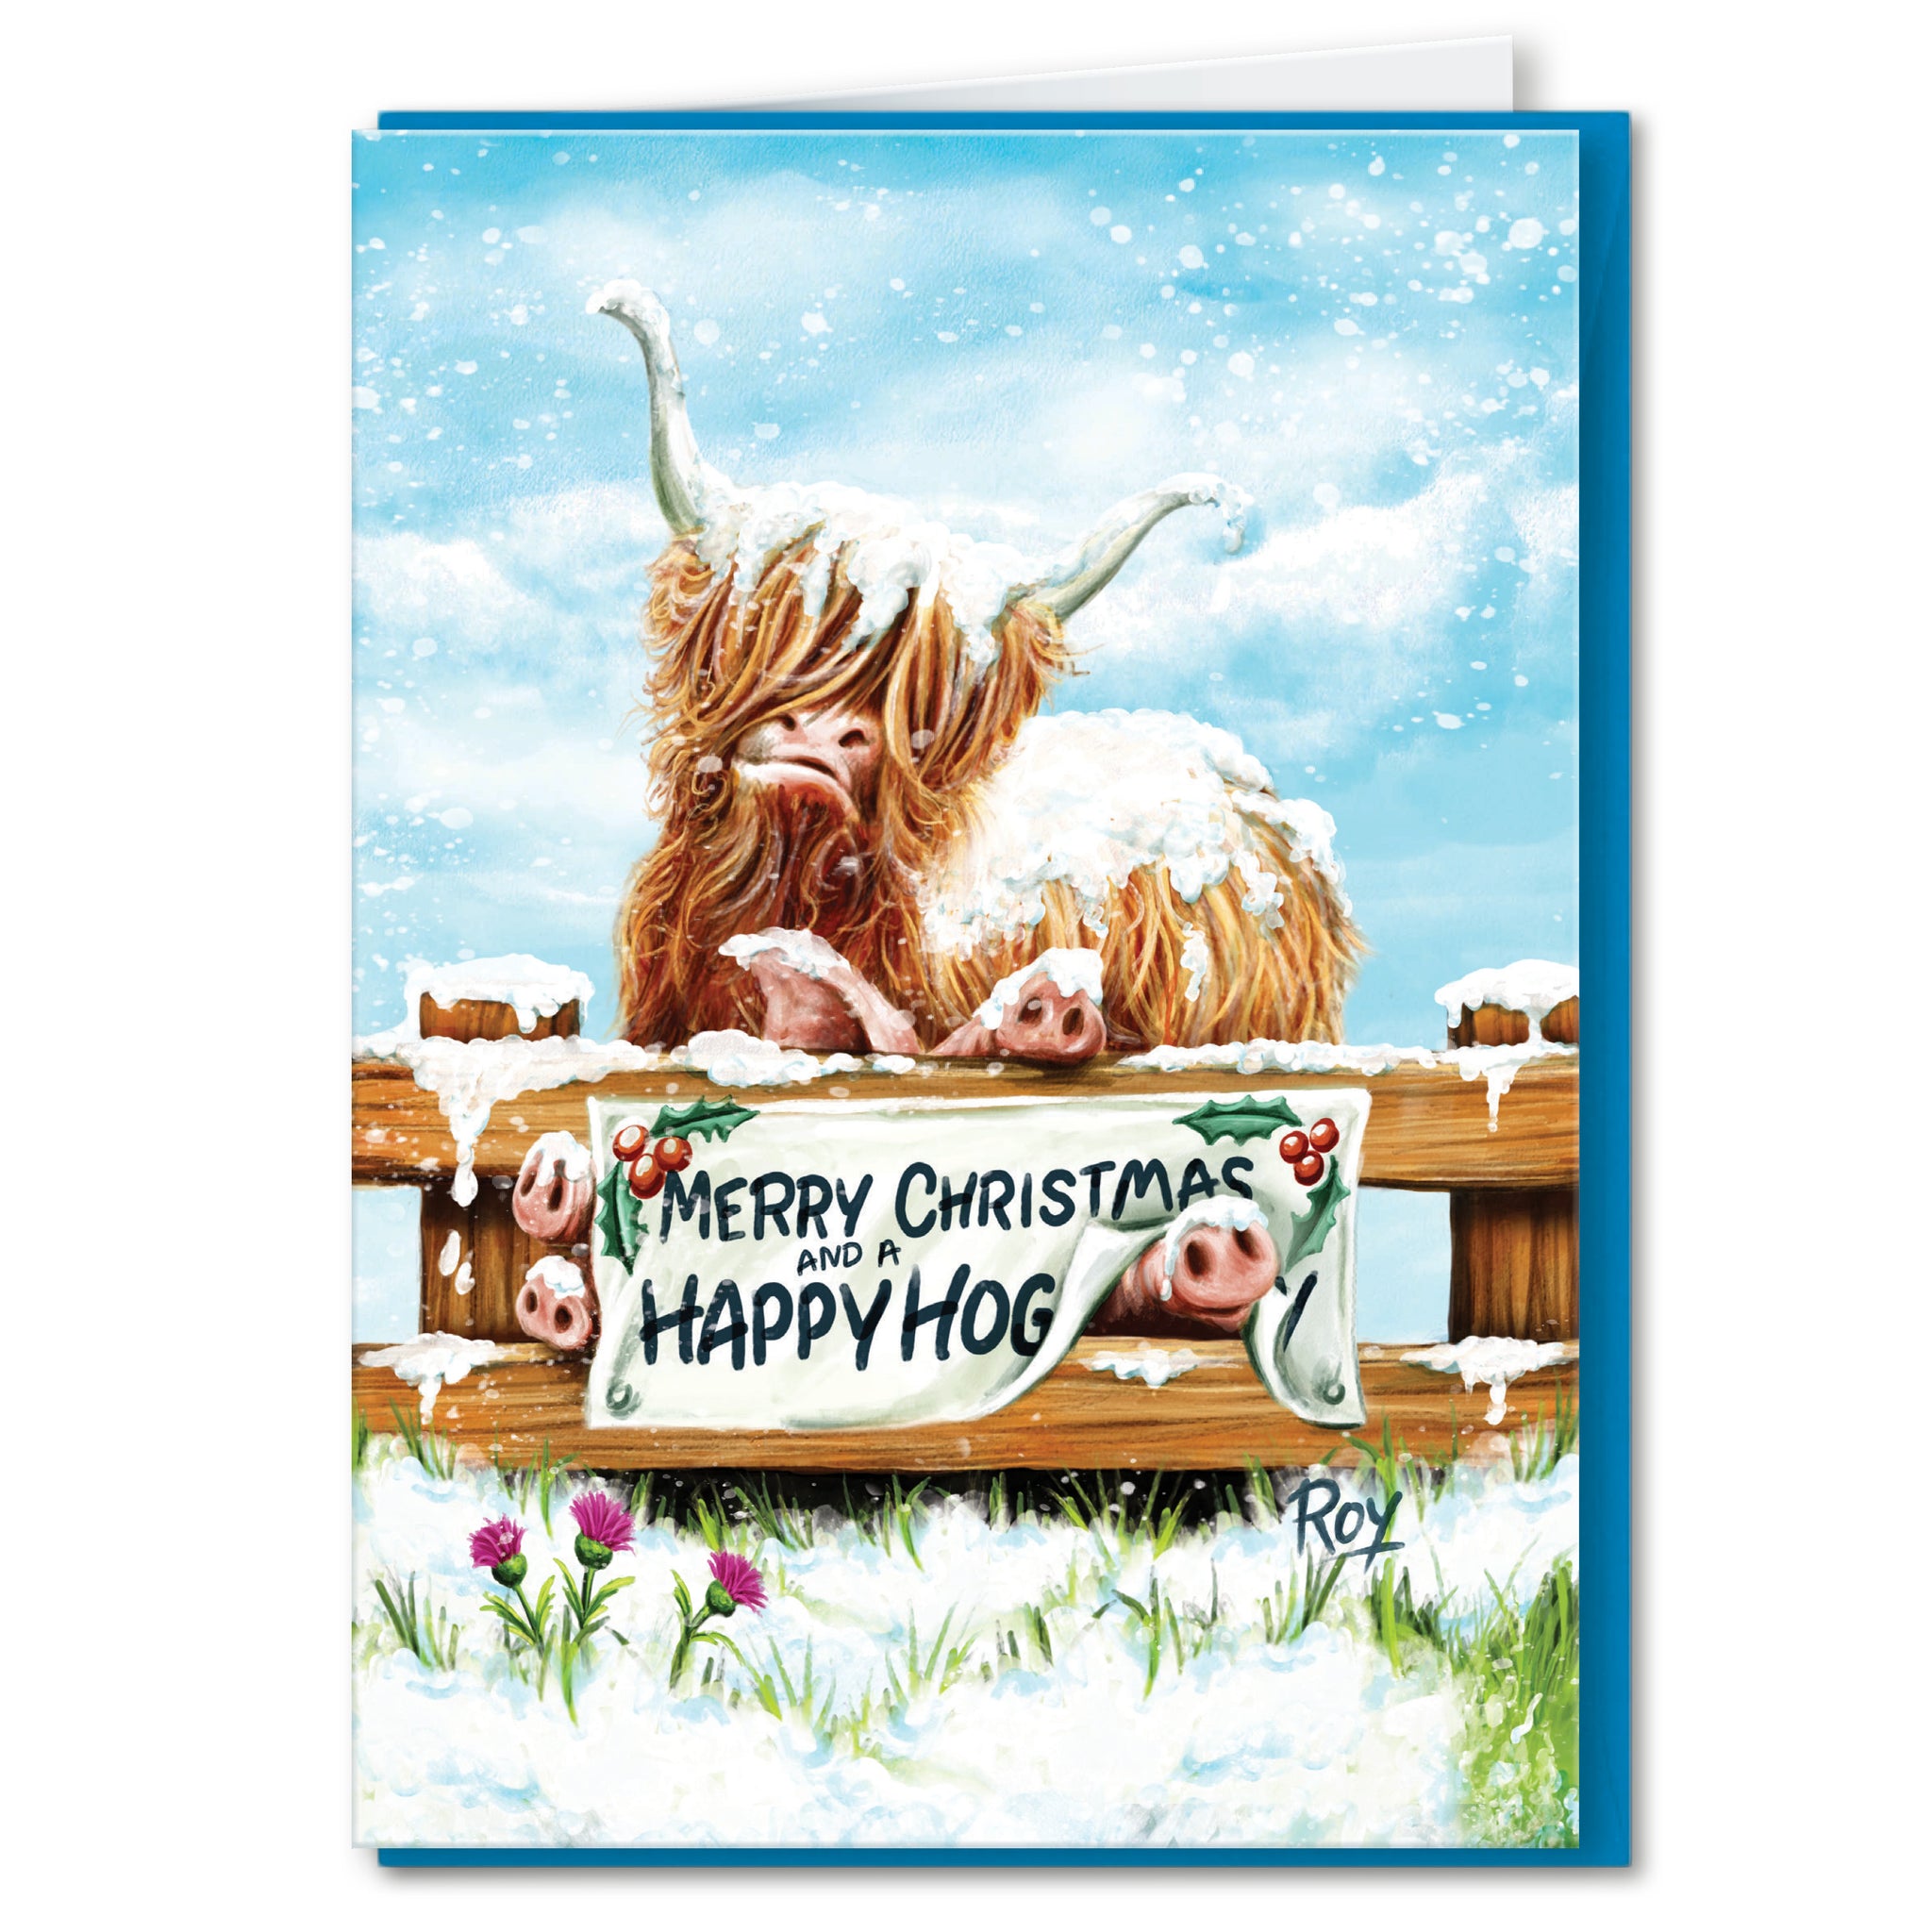 Happy Hog: Christmas Greeting Card